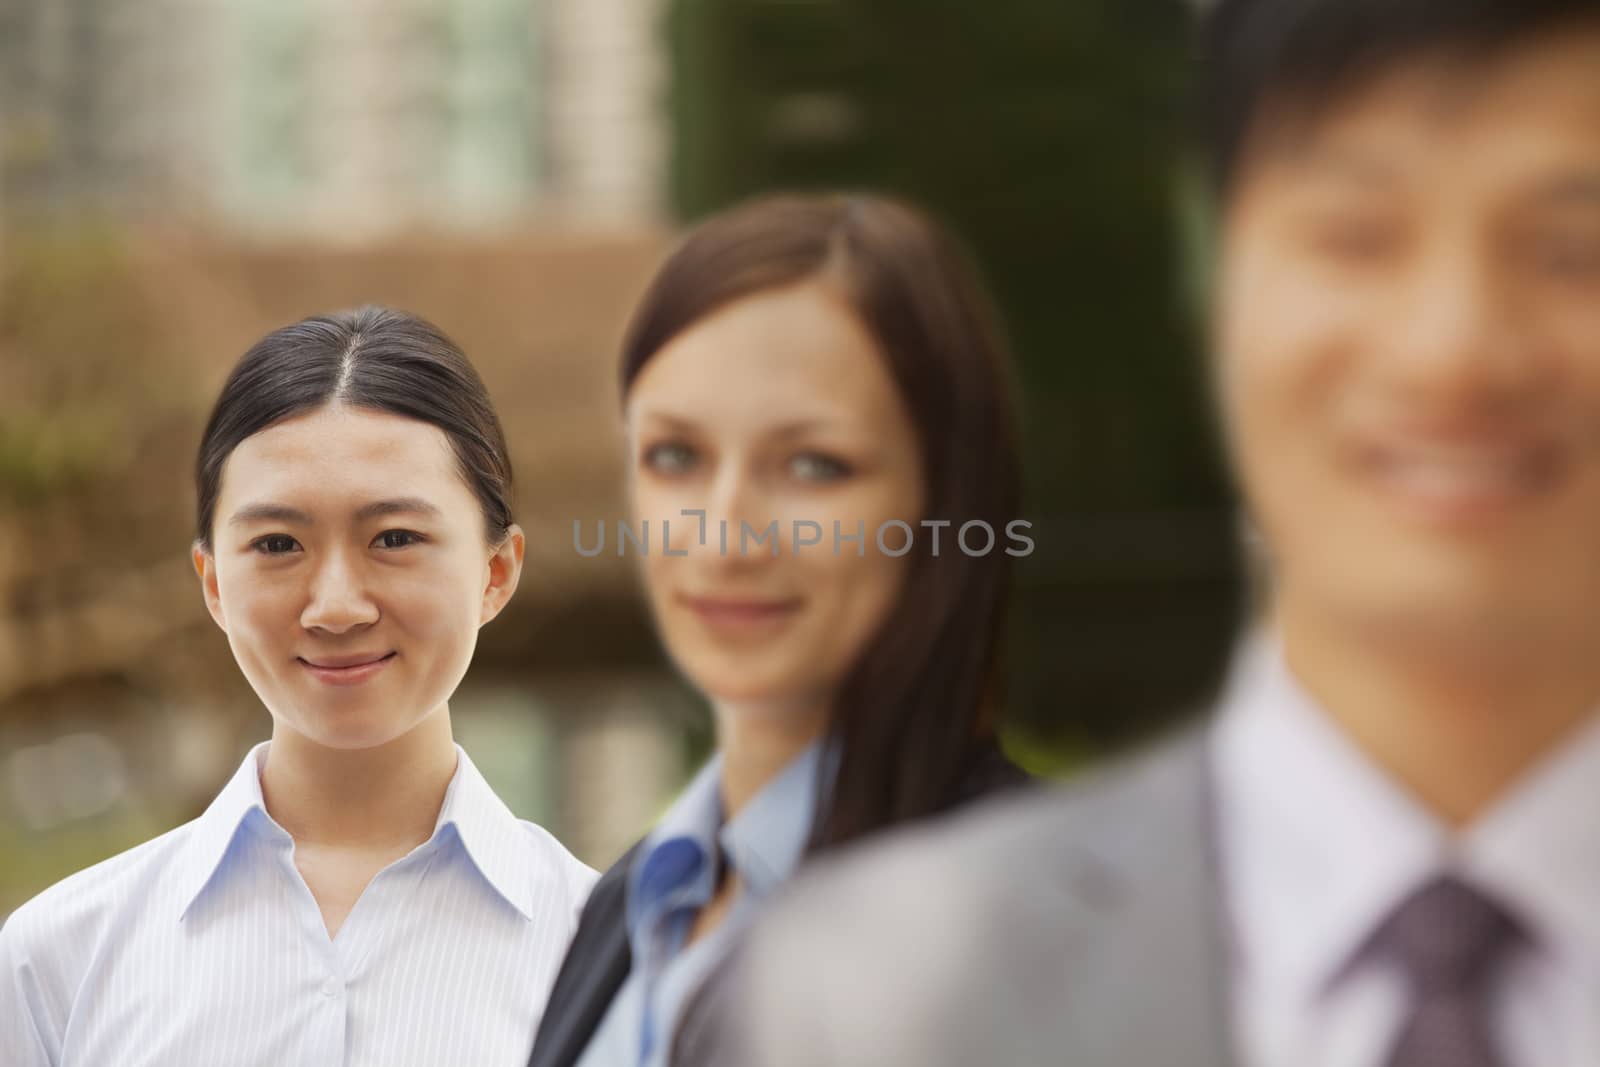 Portrait of three business people, multi-ethnic group